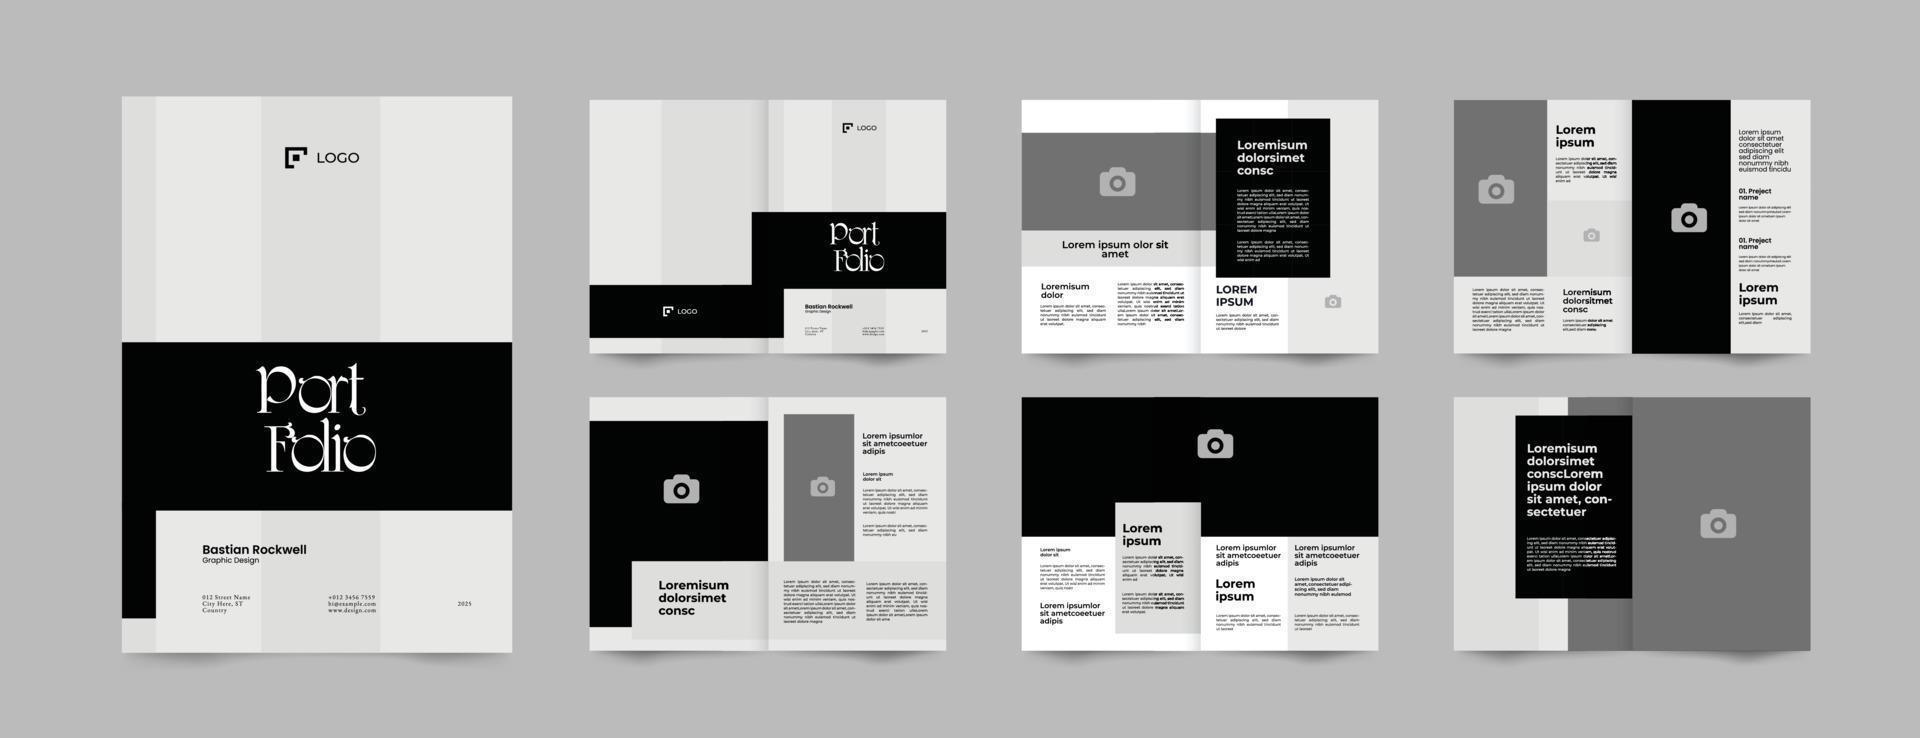 12 páginas de modelo de design de layout de portfólio de fotografia minimalista, revista, proposta, design de modelo de brochura de perfil vetor